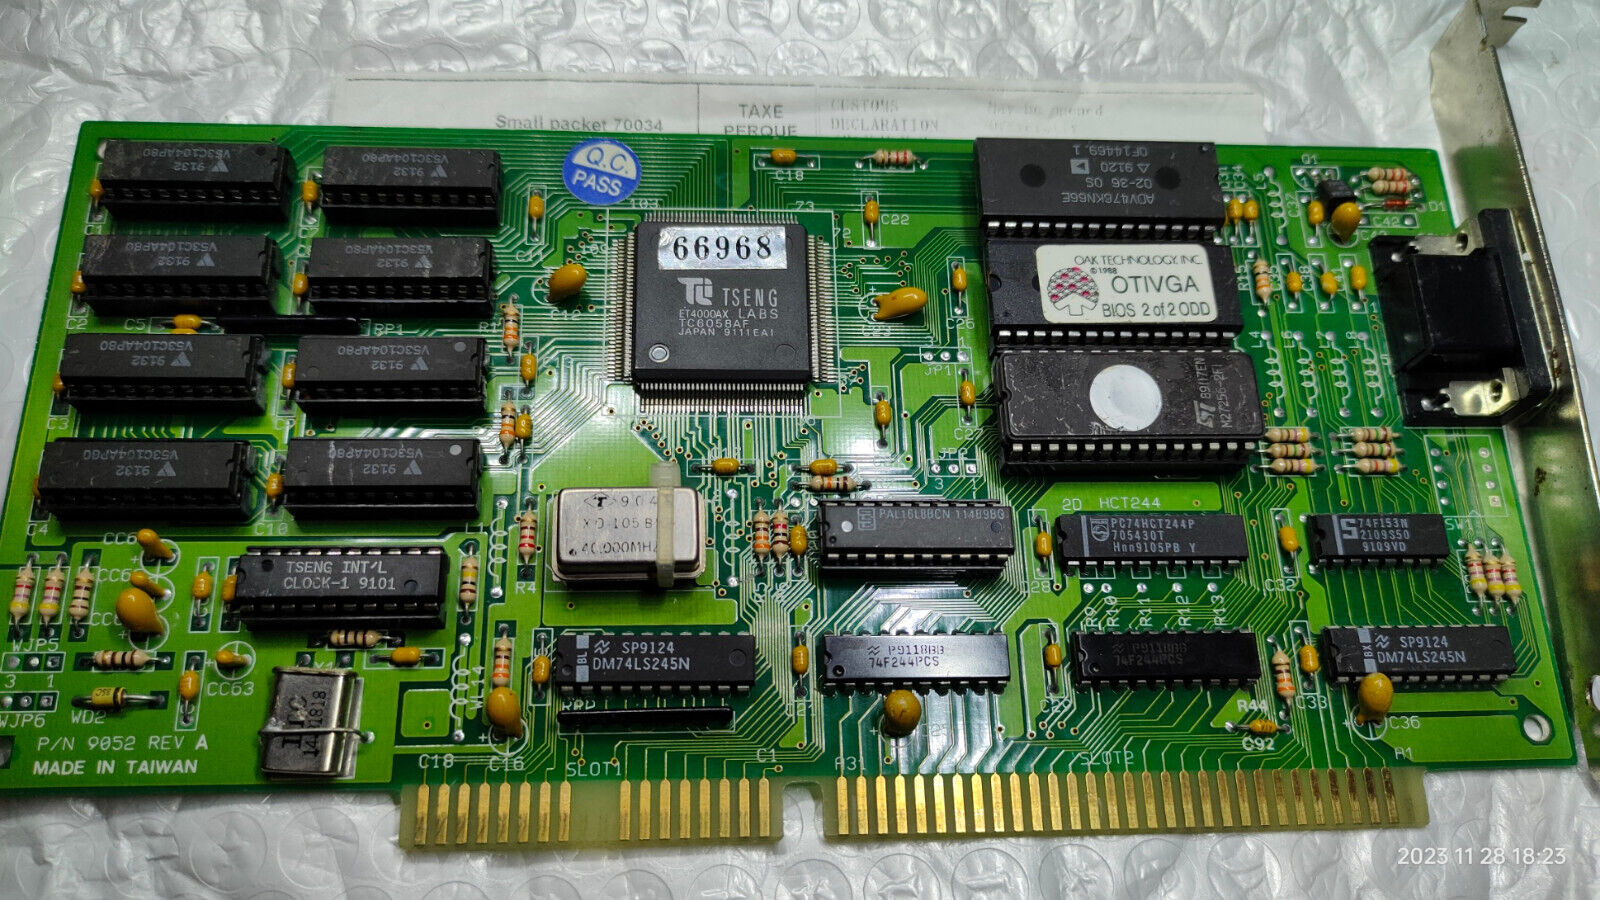 1991 RARE Vintage ISA VGA Card TSENG ET4000AX P/N 9052 REV.A 1MB 286 386 486